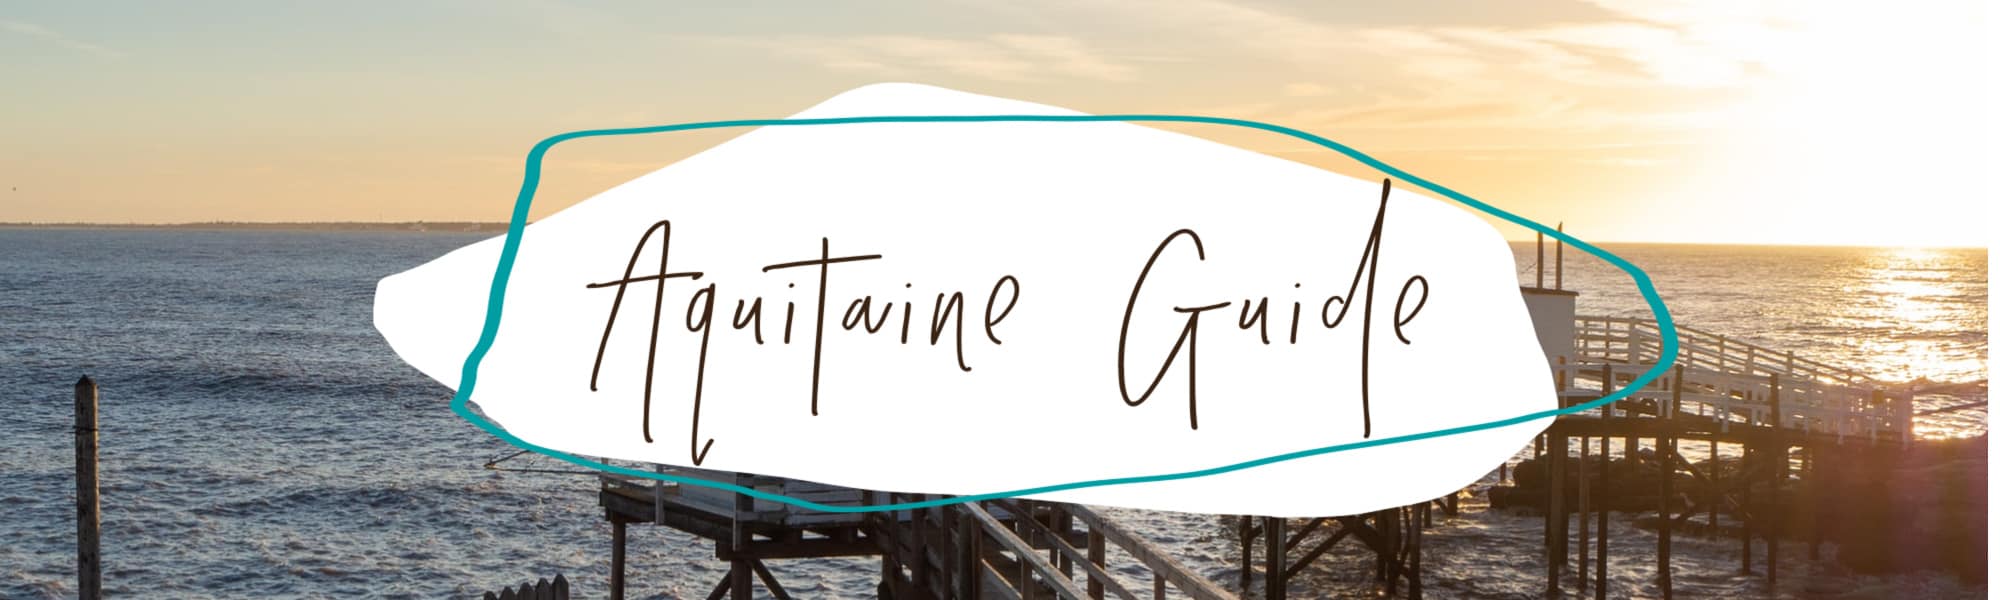 Nouvelle Aquitaine Travel Guide